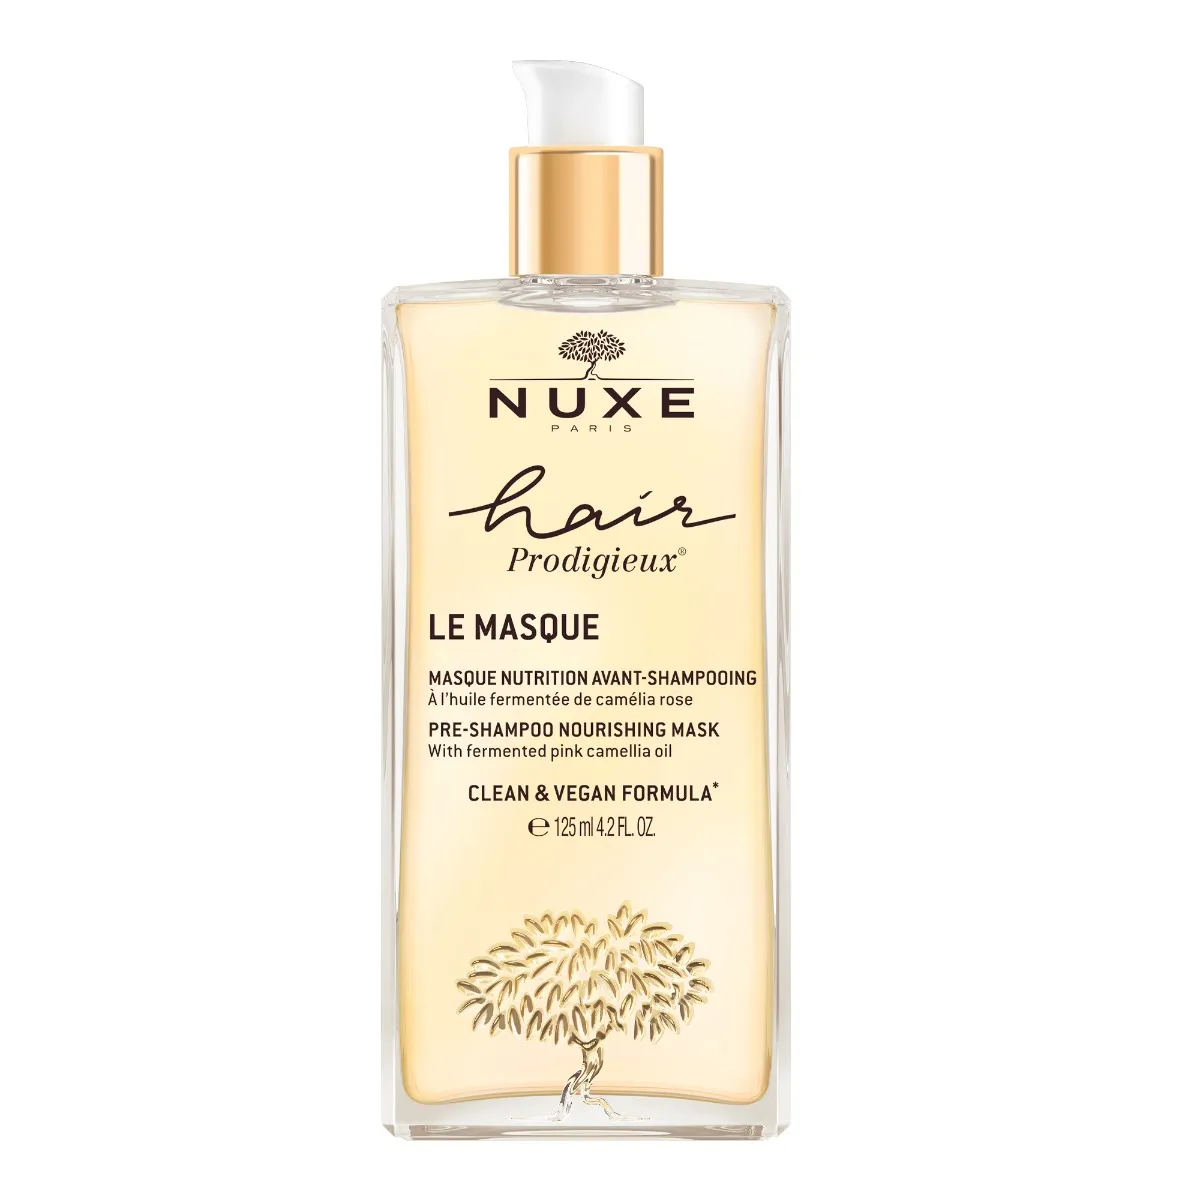 Nuxe-hair-prodigieux-masque-nutrition-avant-shampooing-125ml-3264680034688